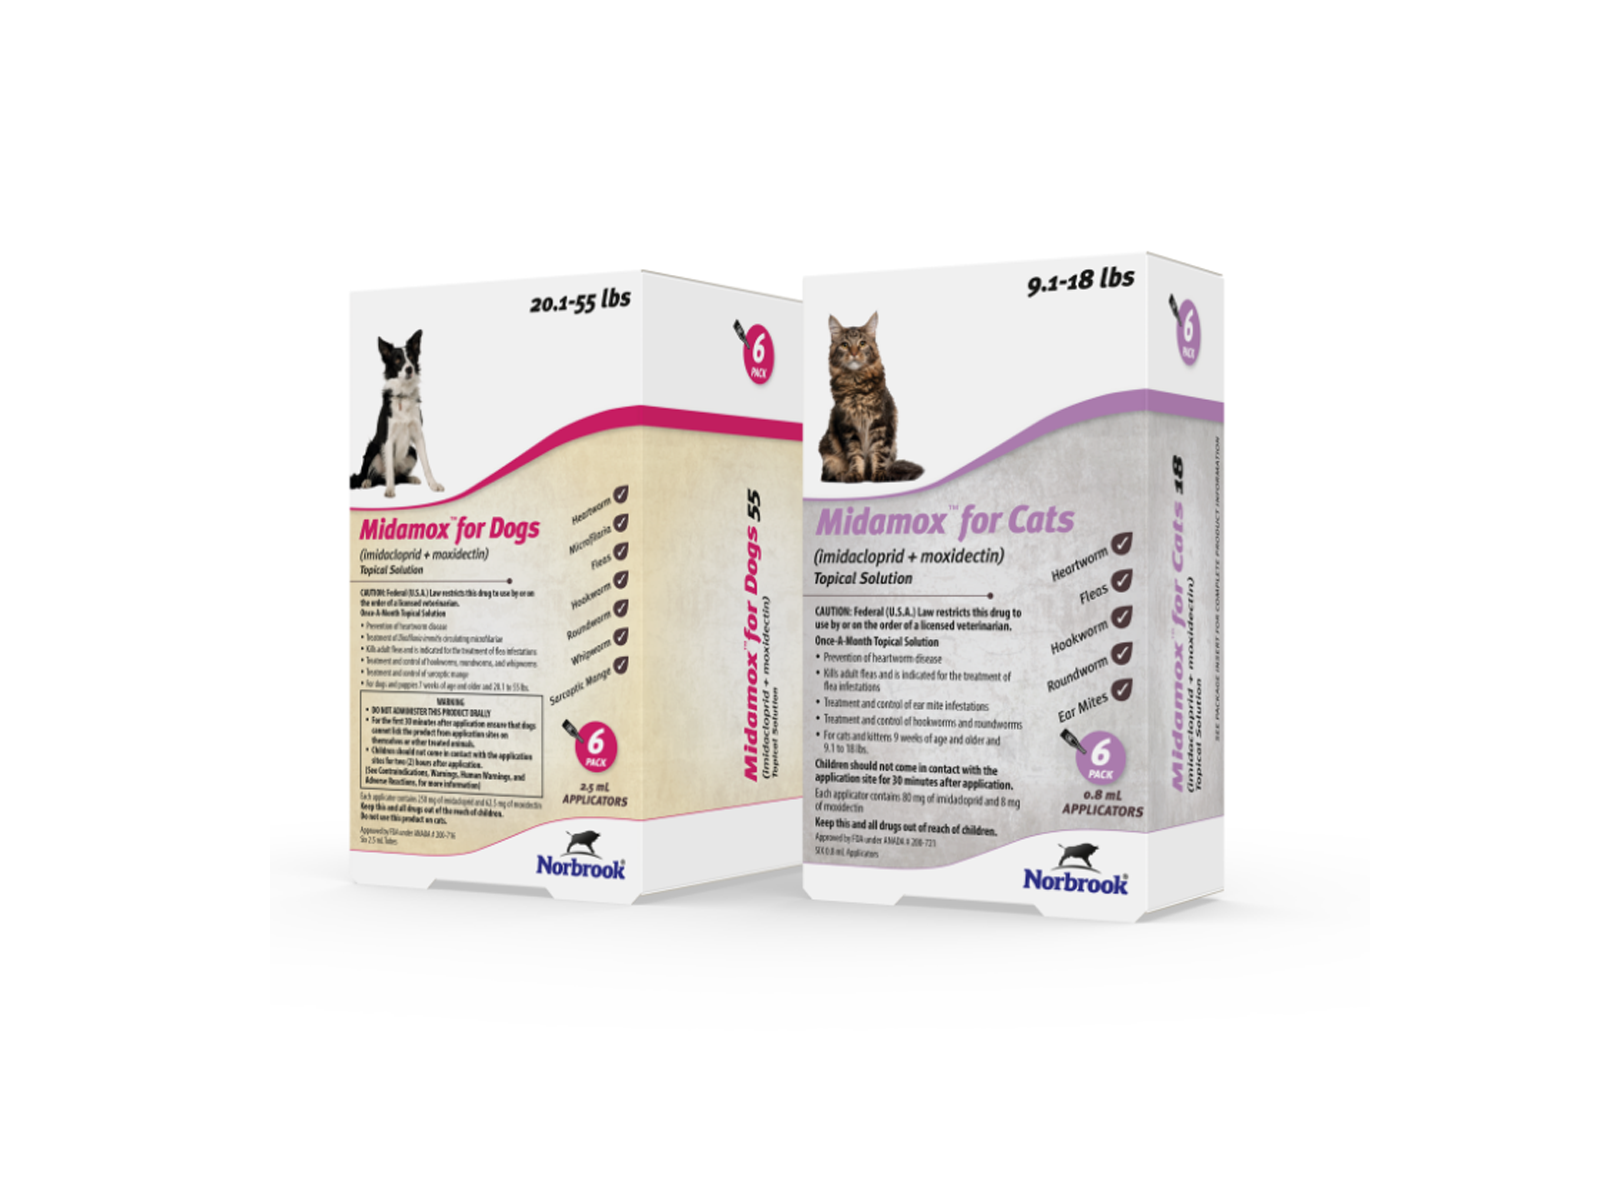 Midamox® (imidacloprid + moxidectin) for Dogs and Cats